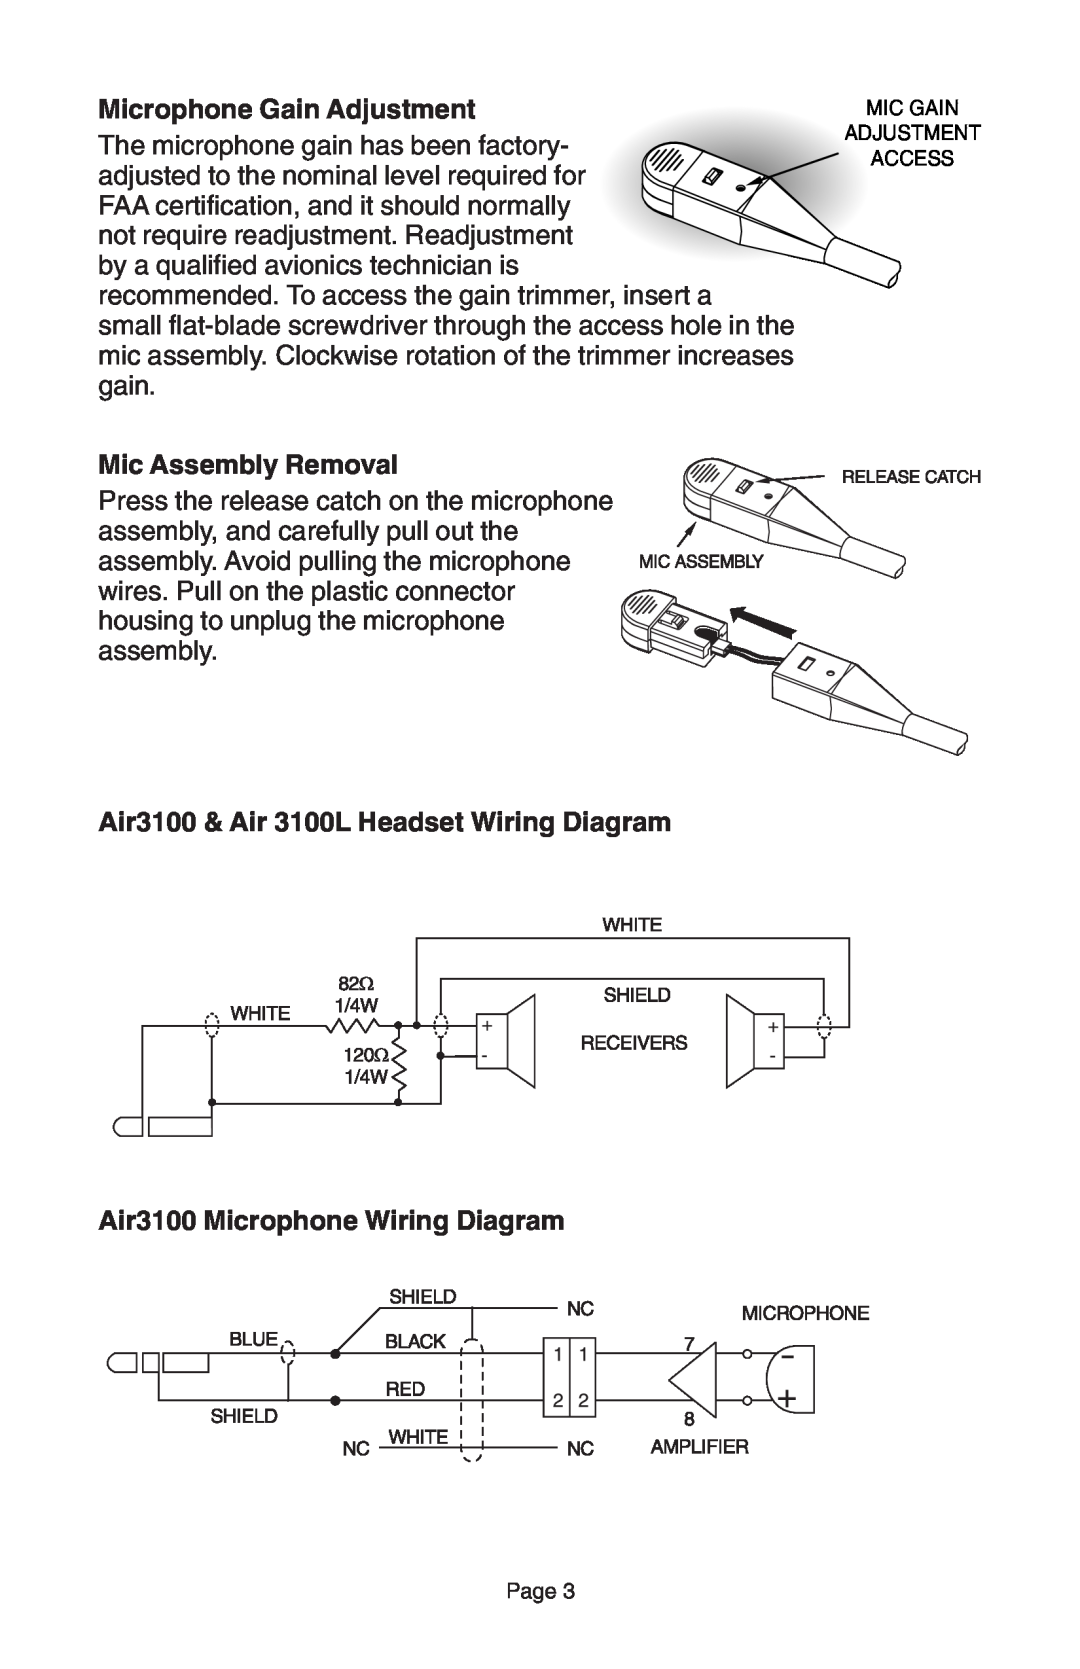 Telex AIR3100L manual Microphone Gain Adjustment, Mic Assembly Removal, Air3100 & Air 3100L Headset Wiring Diagram 